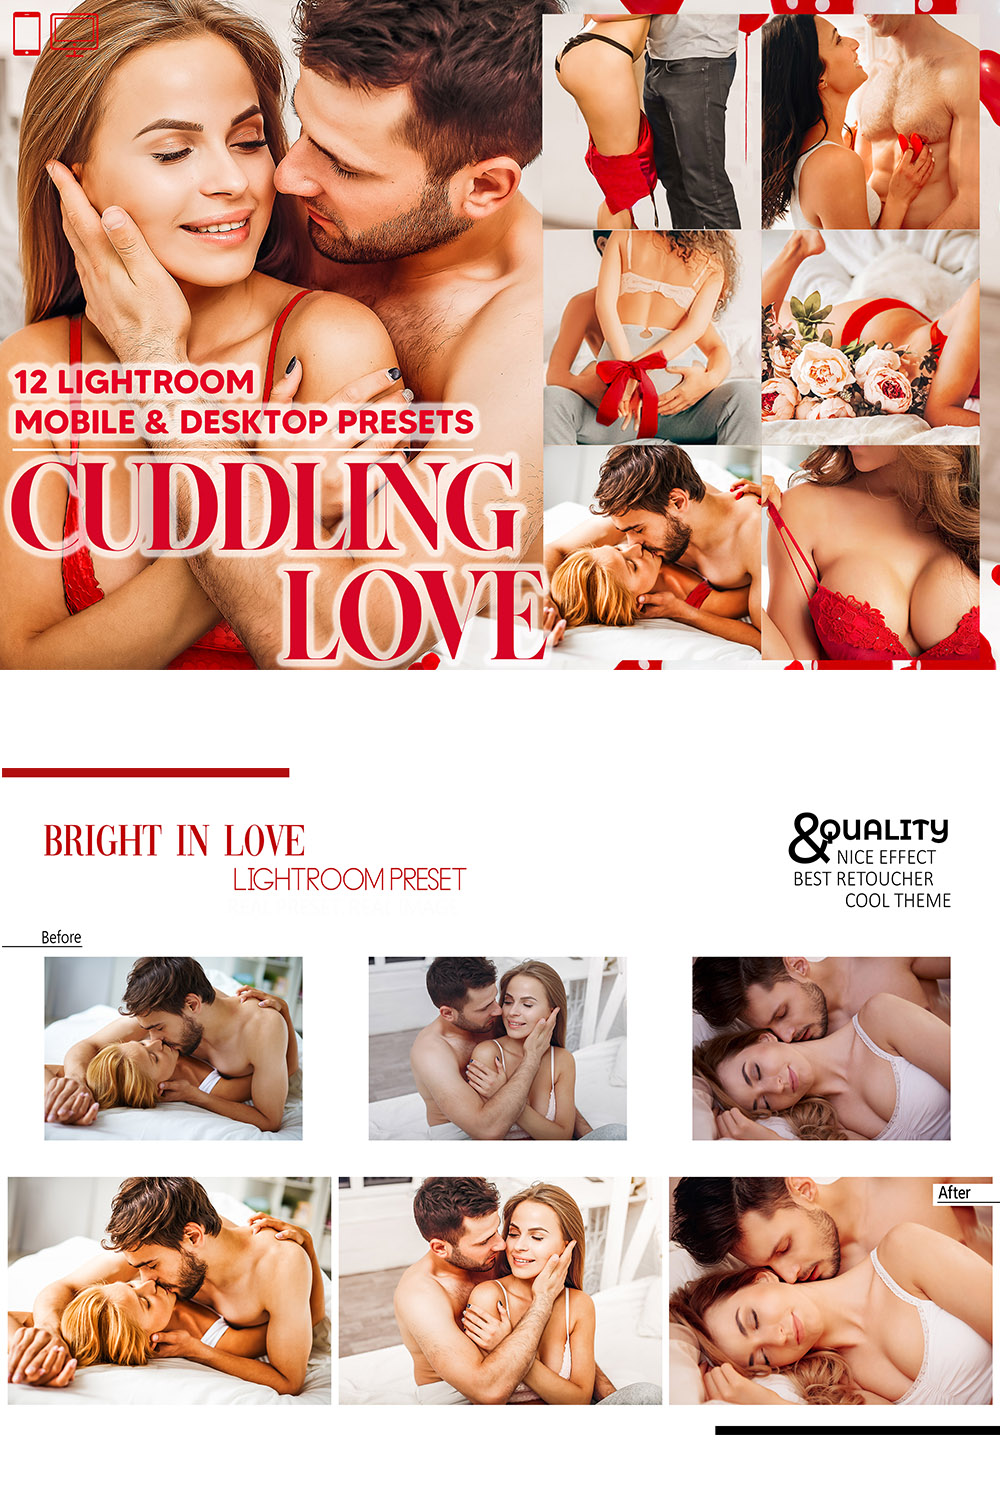 12 Cuddling Love Lightroom Presets, Romance Mobile Preset, Valentine Sexy Desktop, Lifestyle Portrait Theme Instagram LR Filter DNG Warm pinterest preview image.